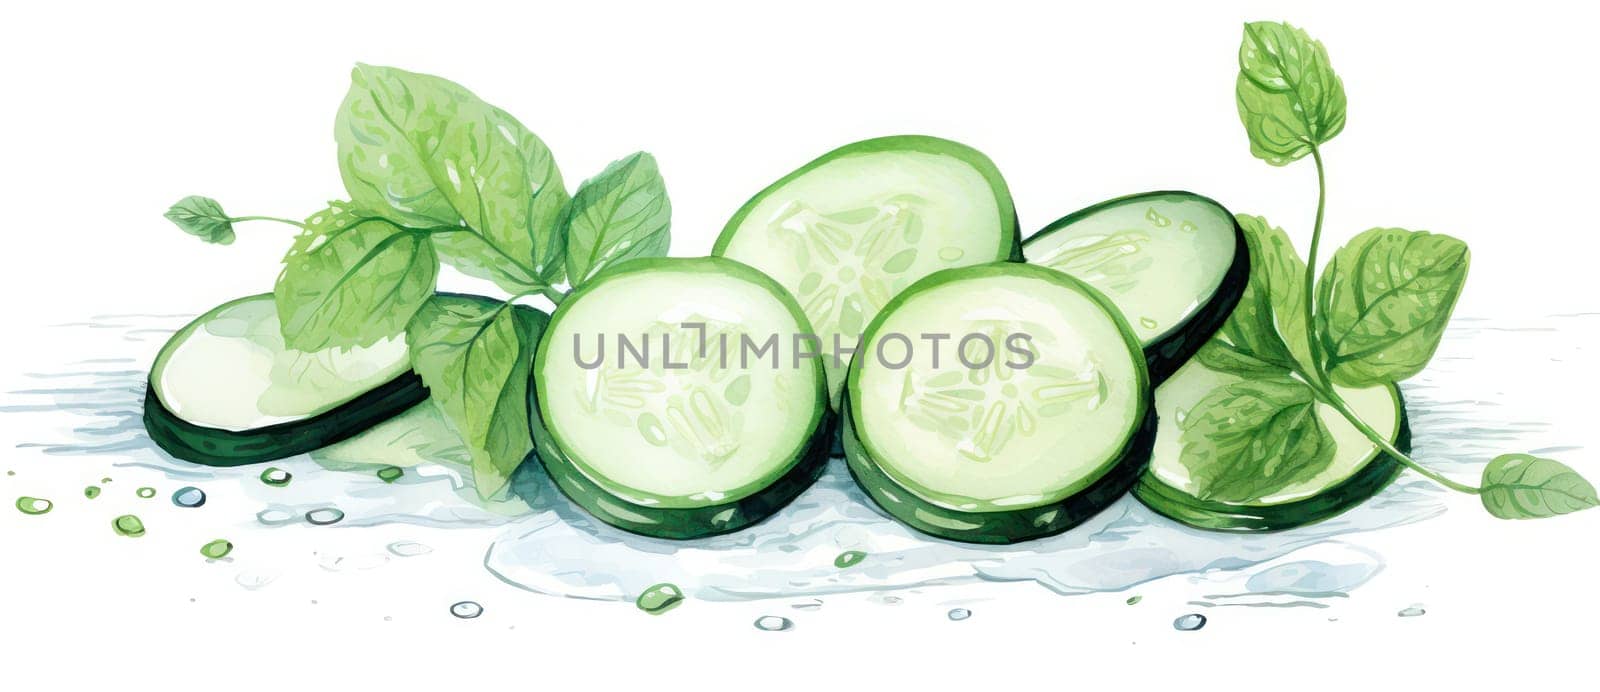 Cucumber, Vegetable, Food: Freshness, Green Organic Fresh Healthy Vitamin Ripe Natural Diet Fruit Background Health Liquid Treatment. by Vichizh